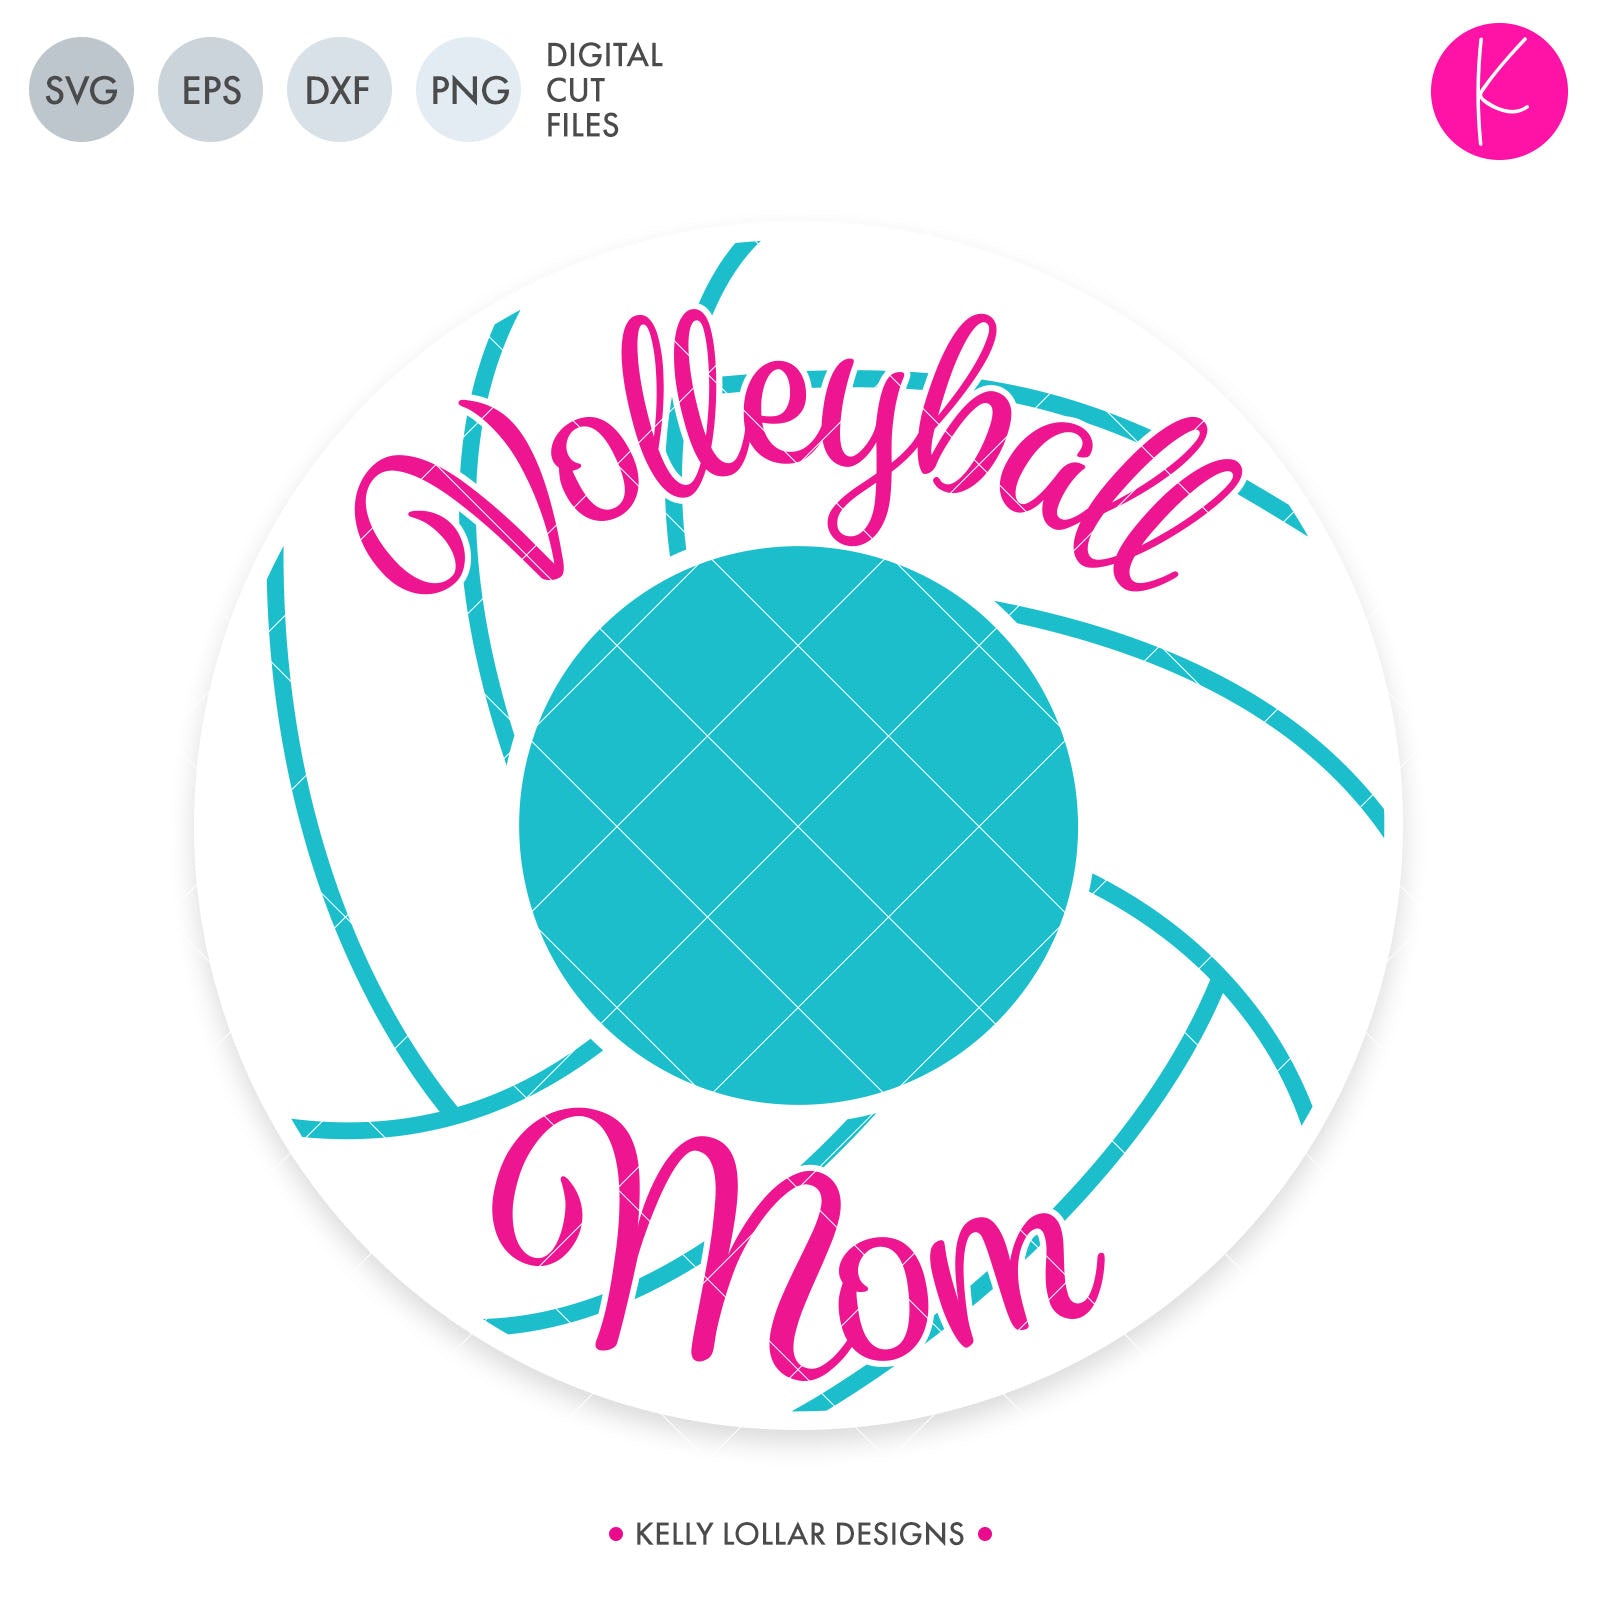 Download Volleyball Team Shirt SVG File | Kelly Lollar Designs